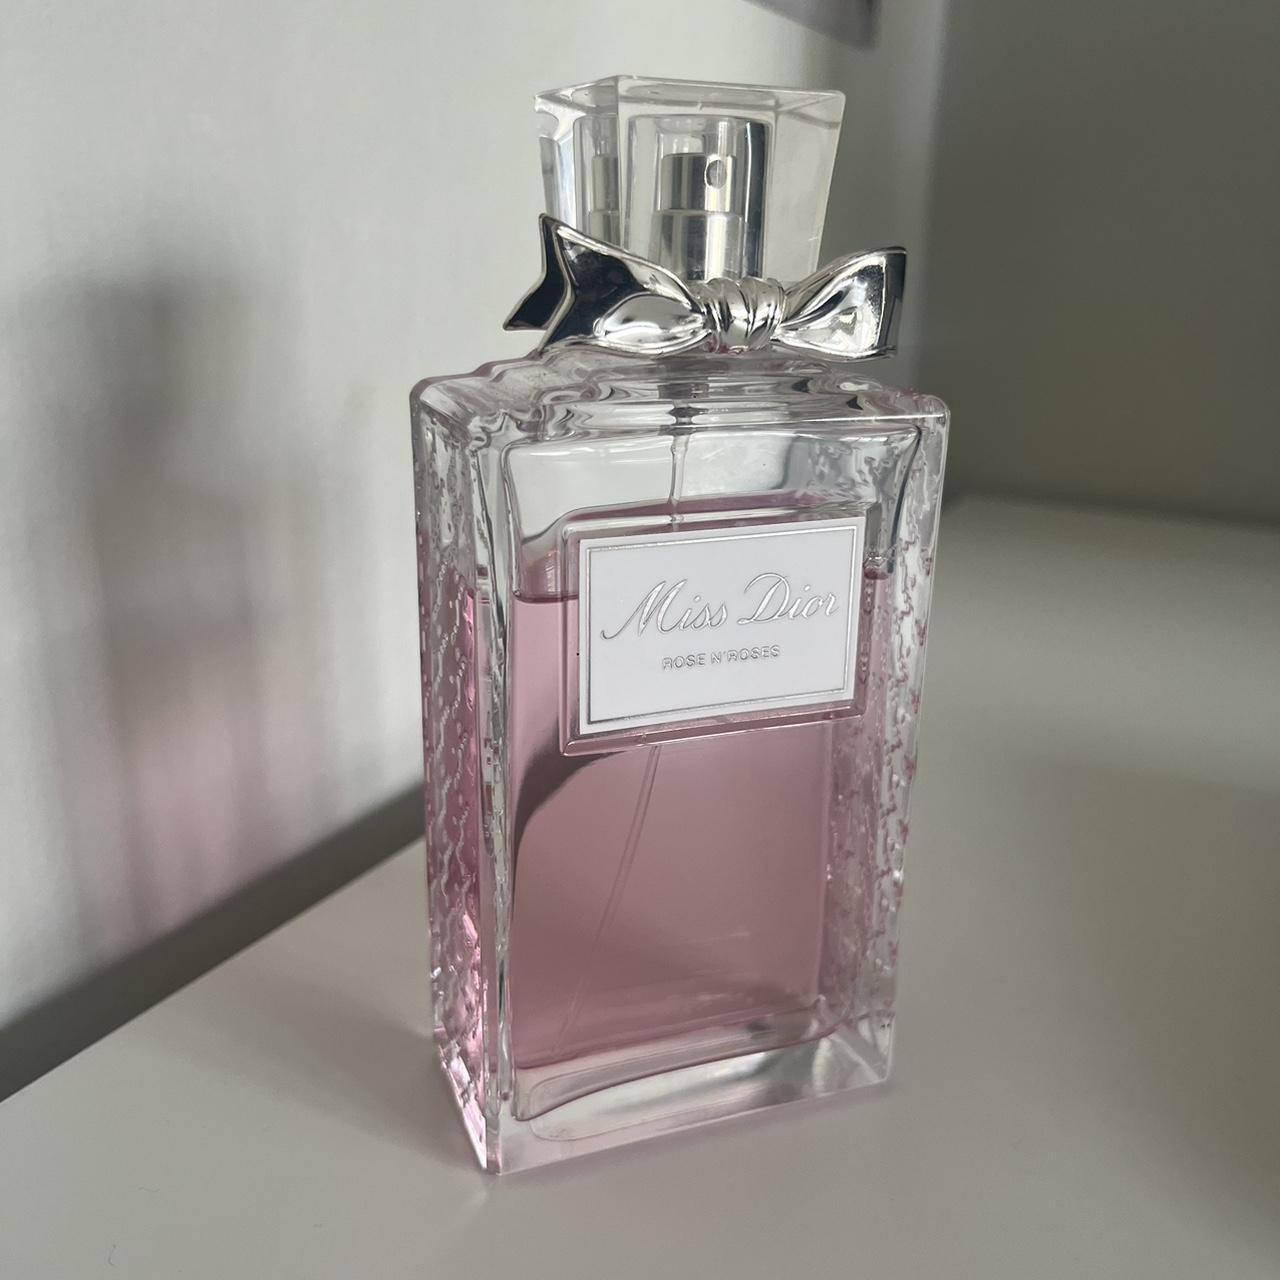 Bestseller FULL SIZE Miss Dior Rose N’ Roses perfume... - Depop